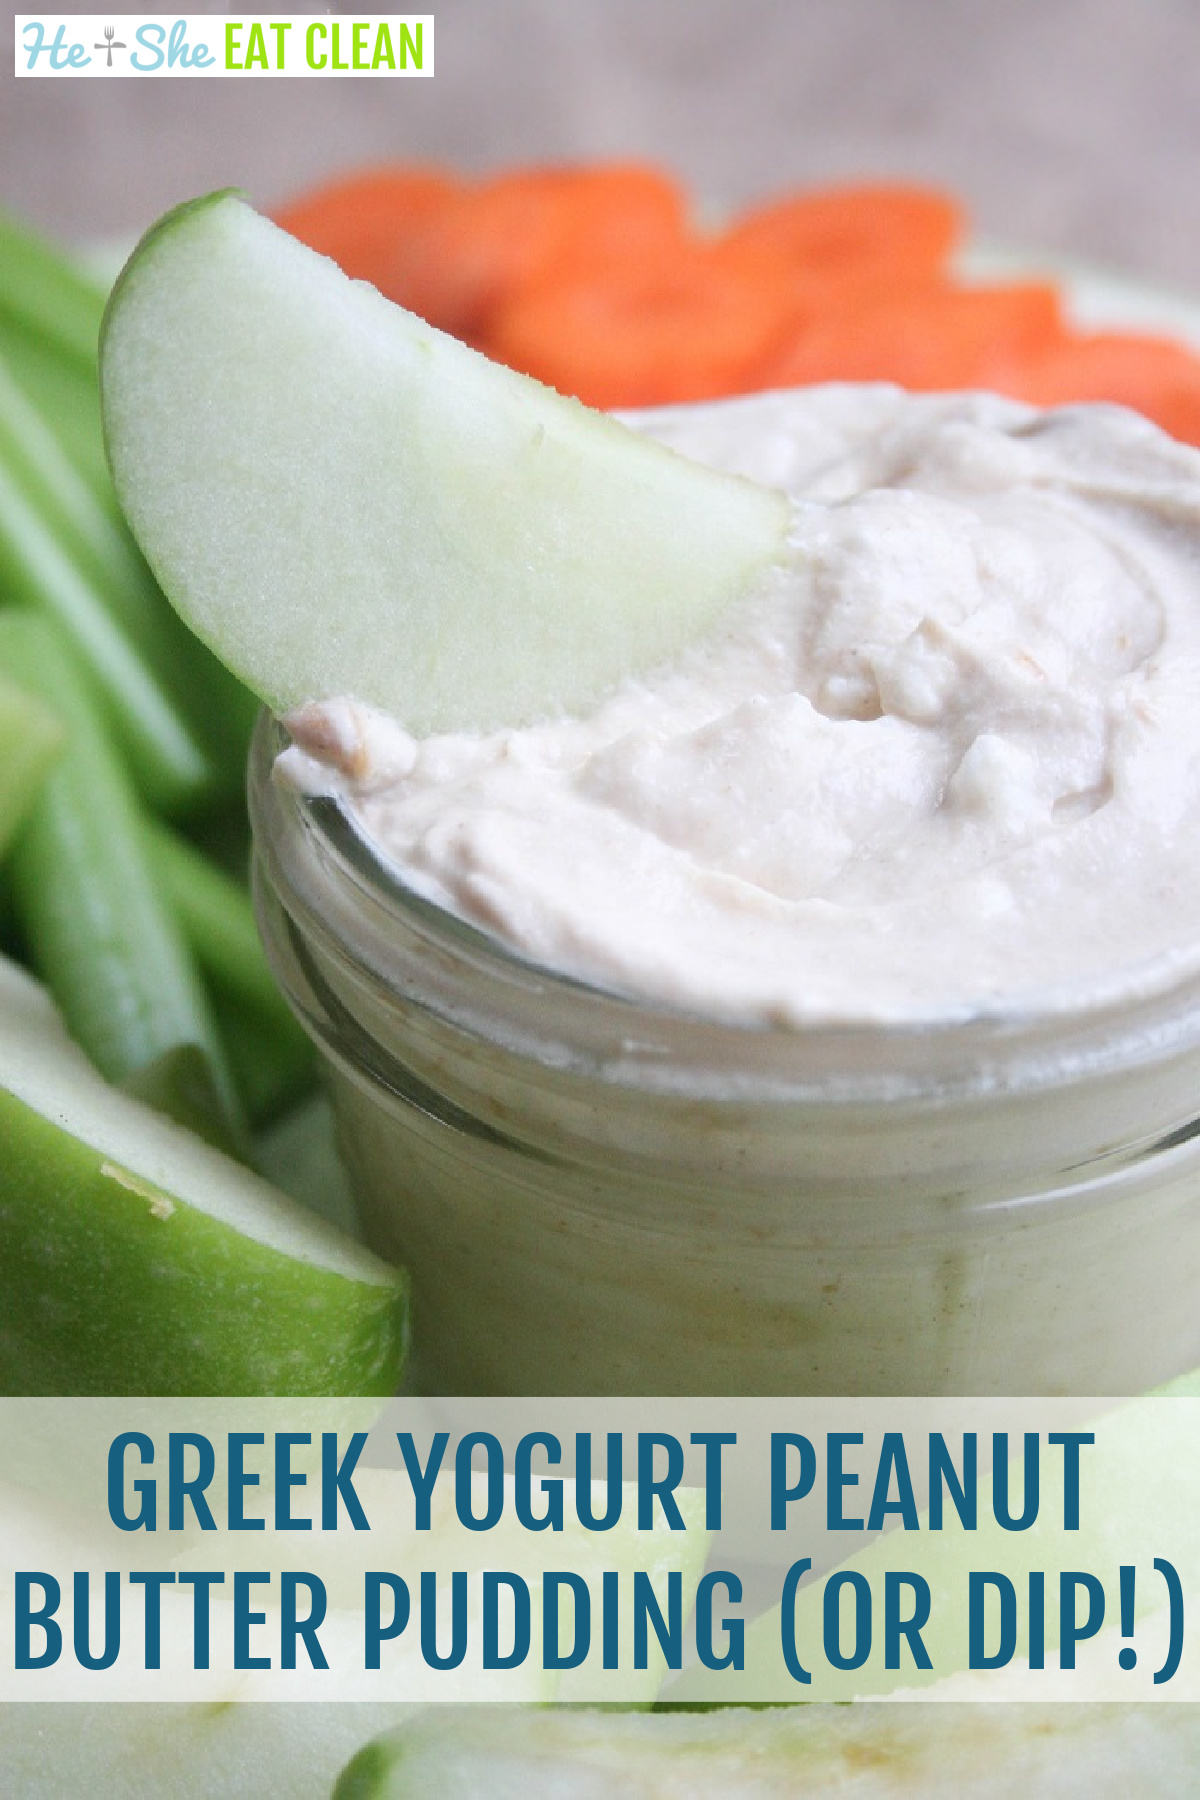 clear jar of Greek yogurt peanut butter pudding/dip with a green apple slice